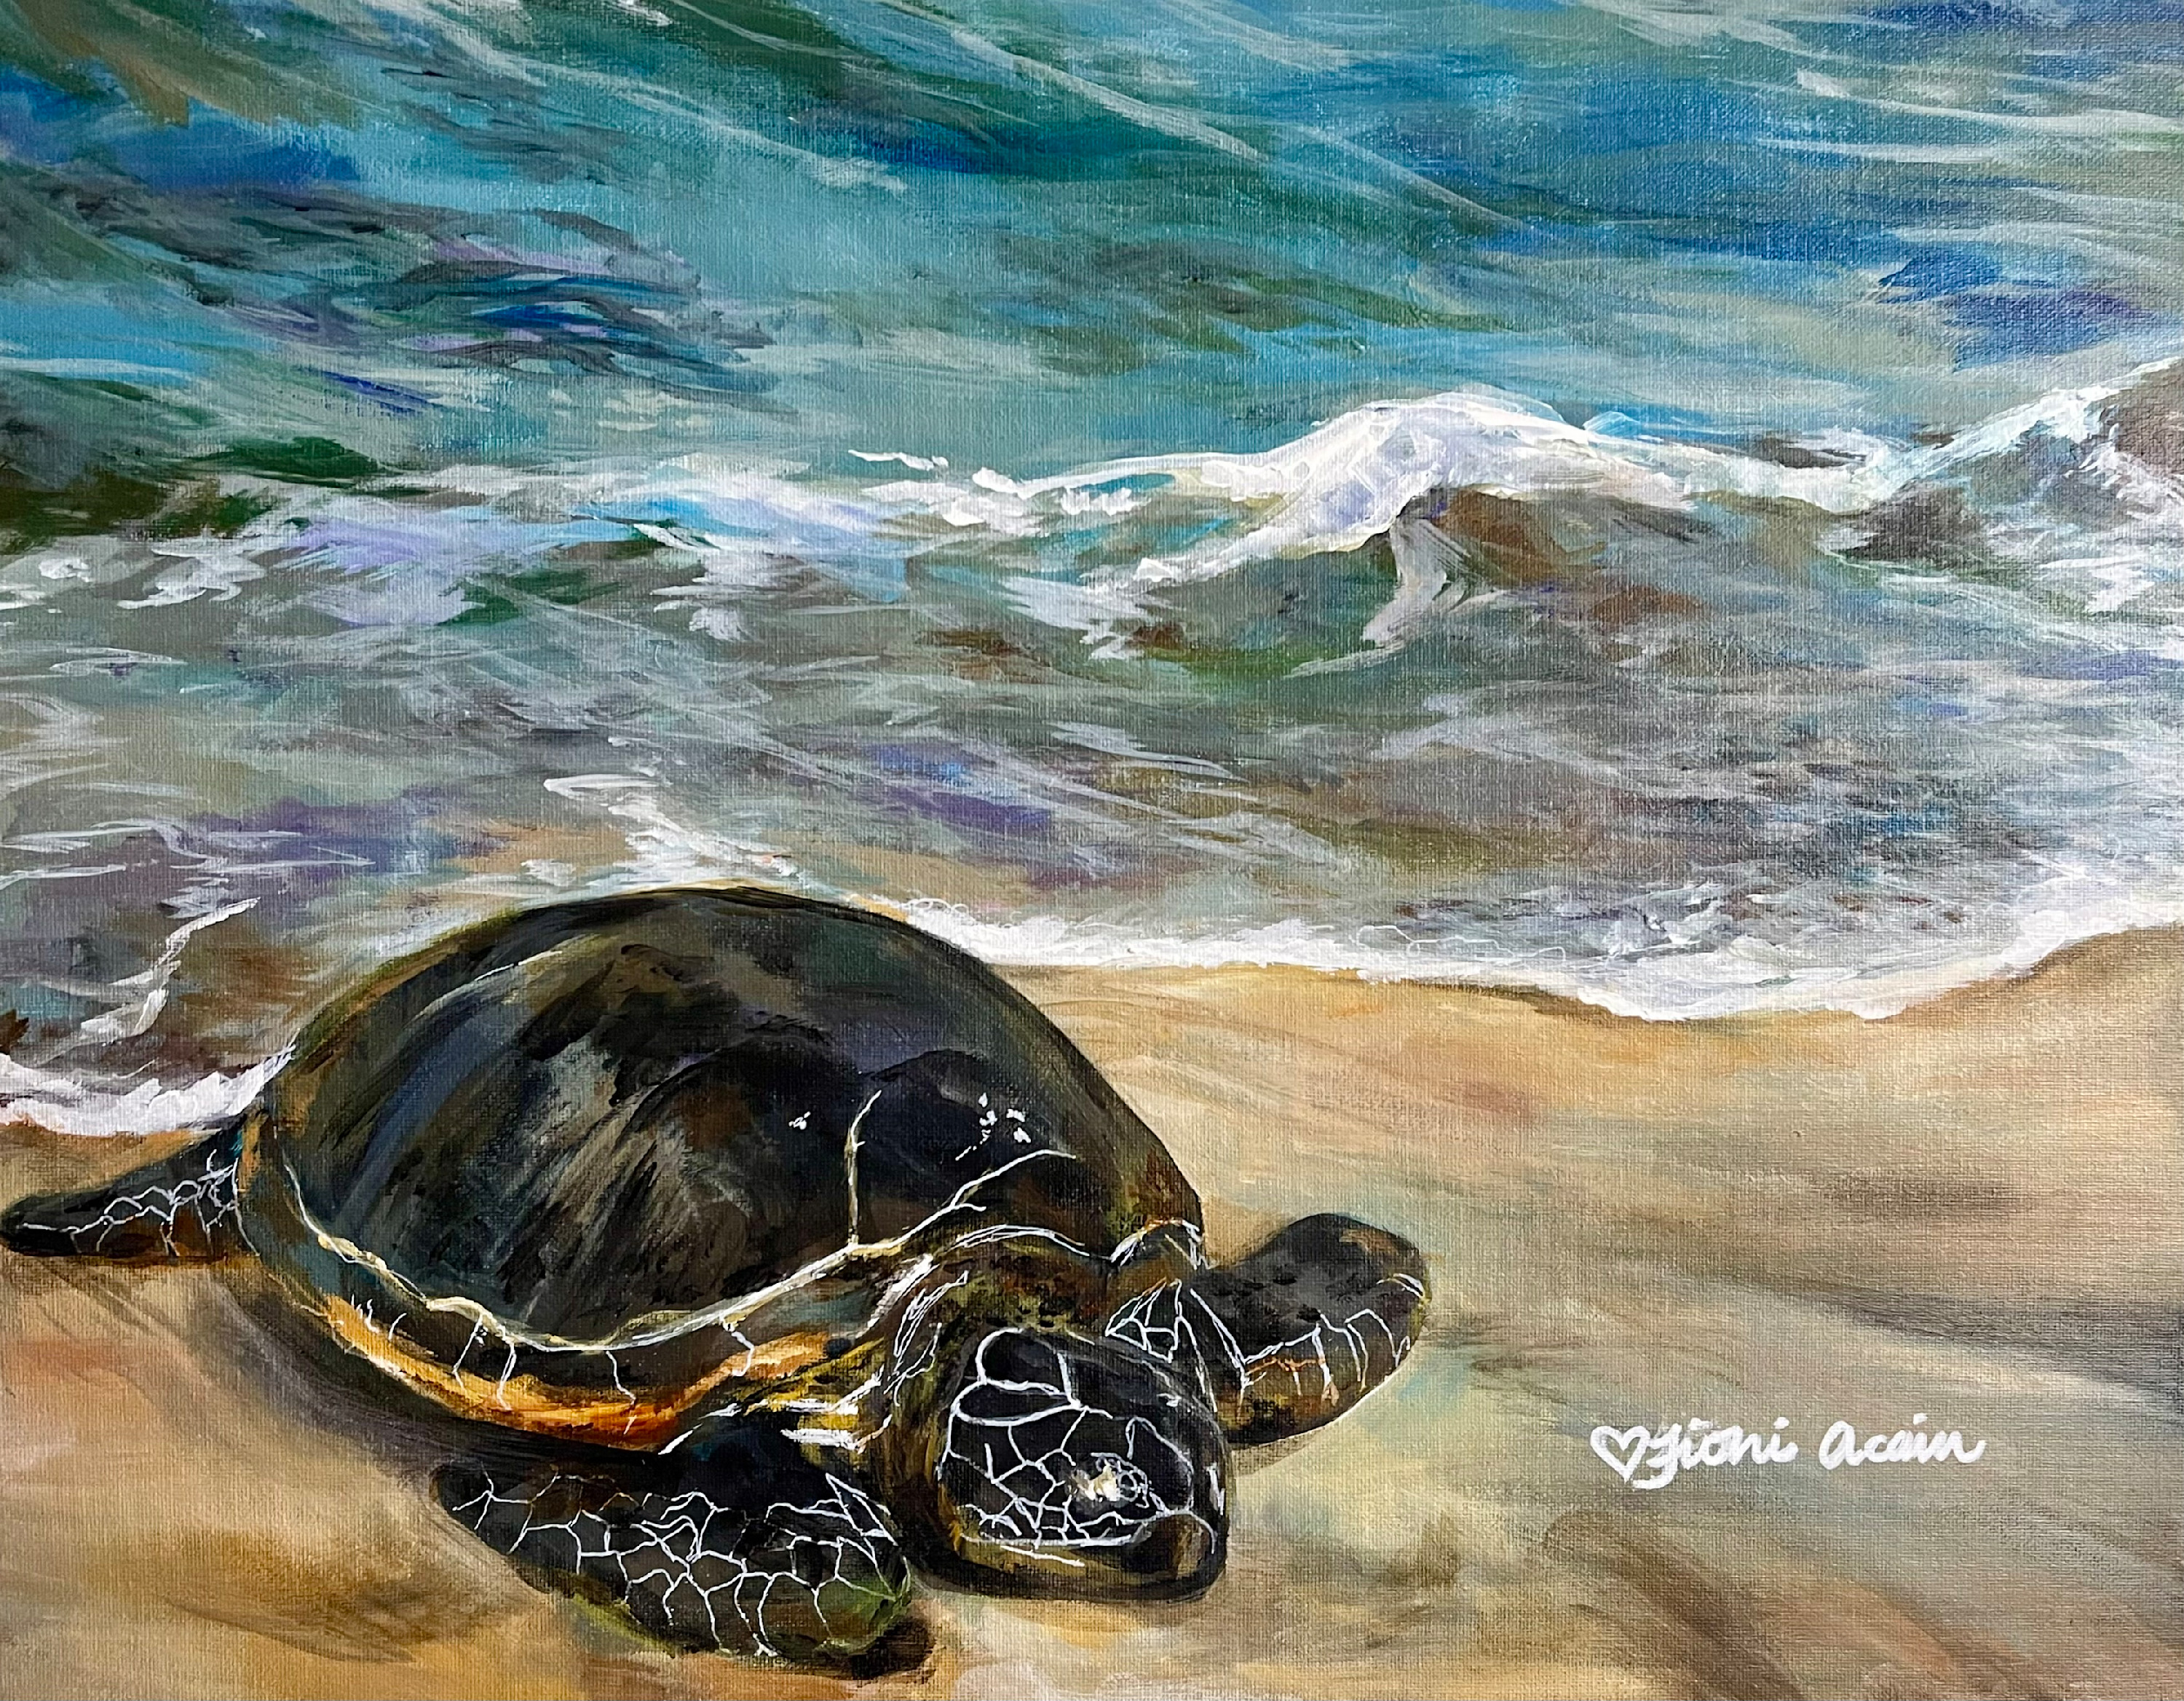 Tioni acain  peace and mana  turtle acrylic on canvas  20 x16   hlewap